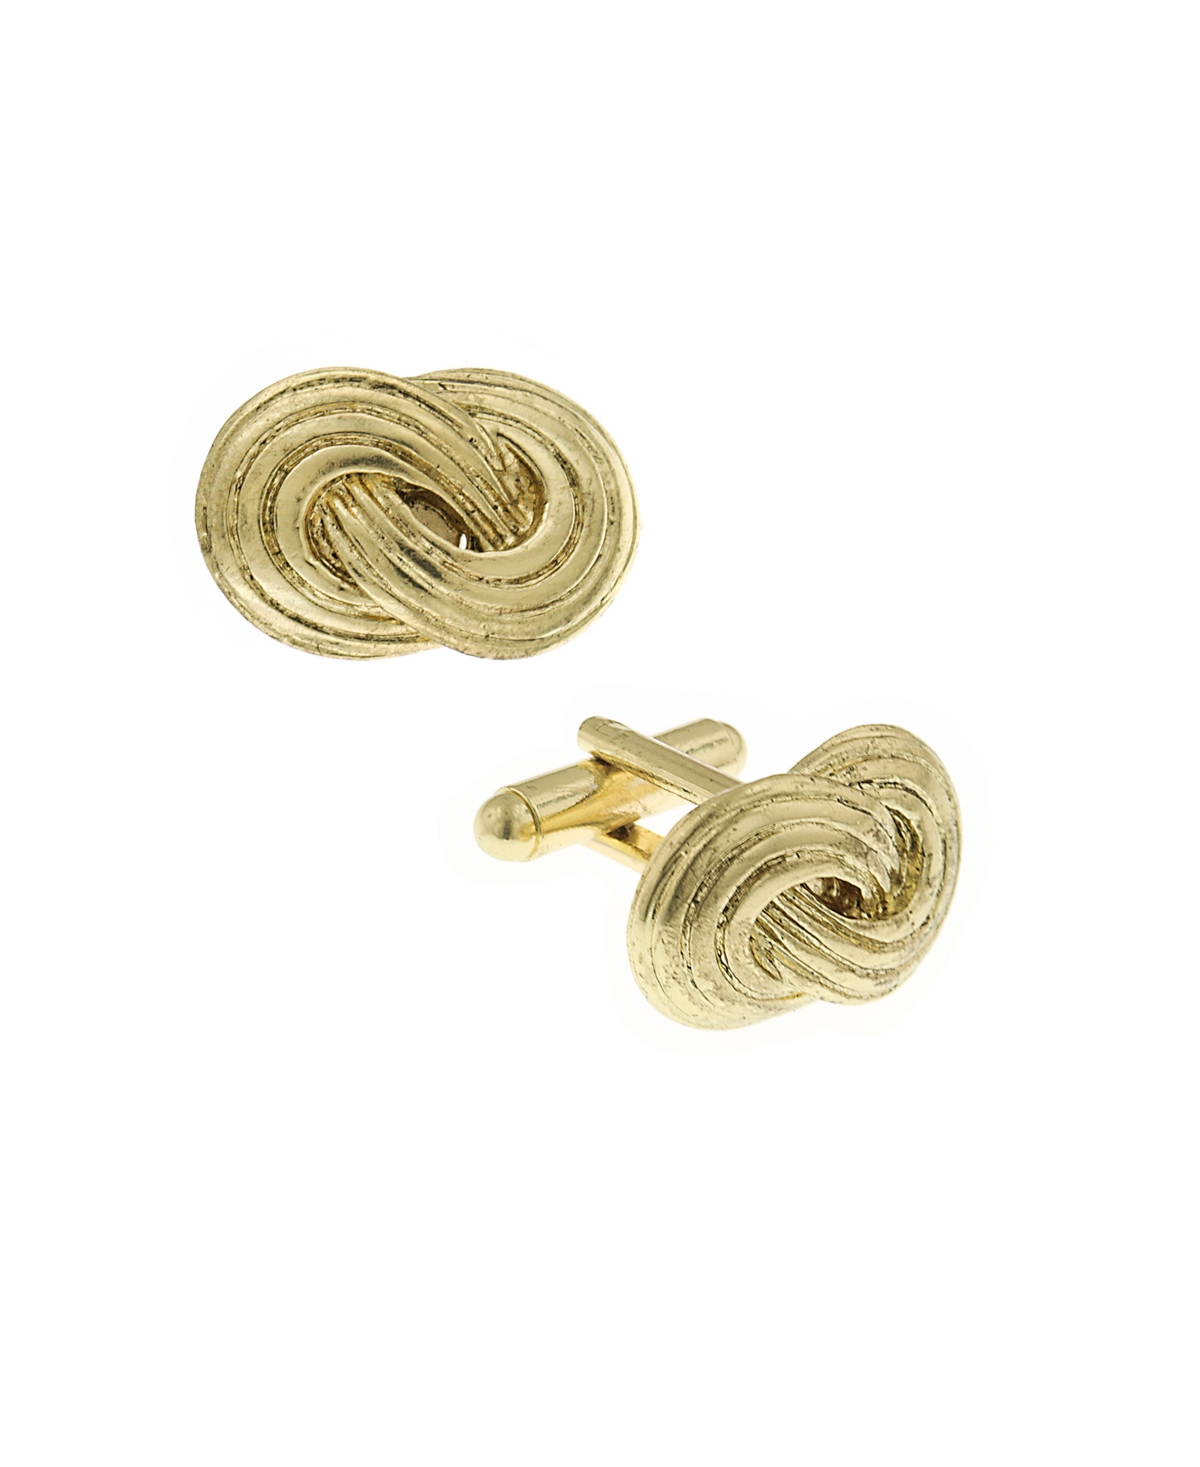 1928 Jewelry 14k Gold-plated Infinity Knot Cufflinks